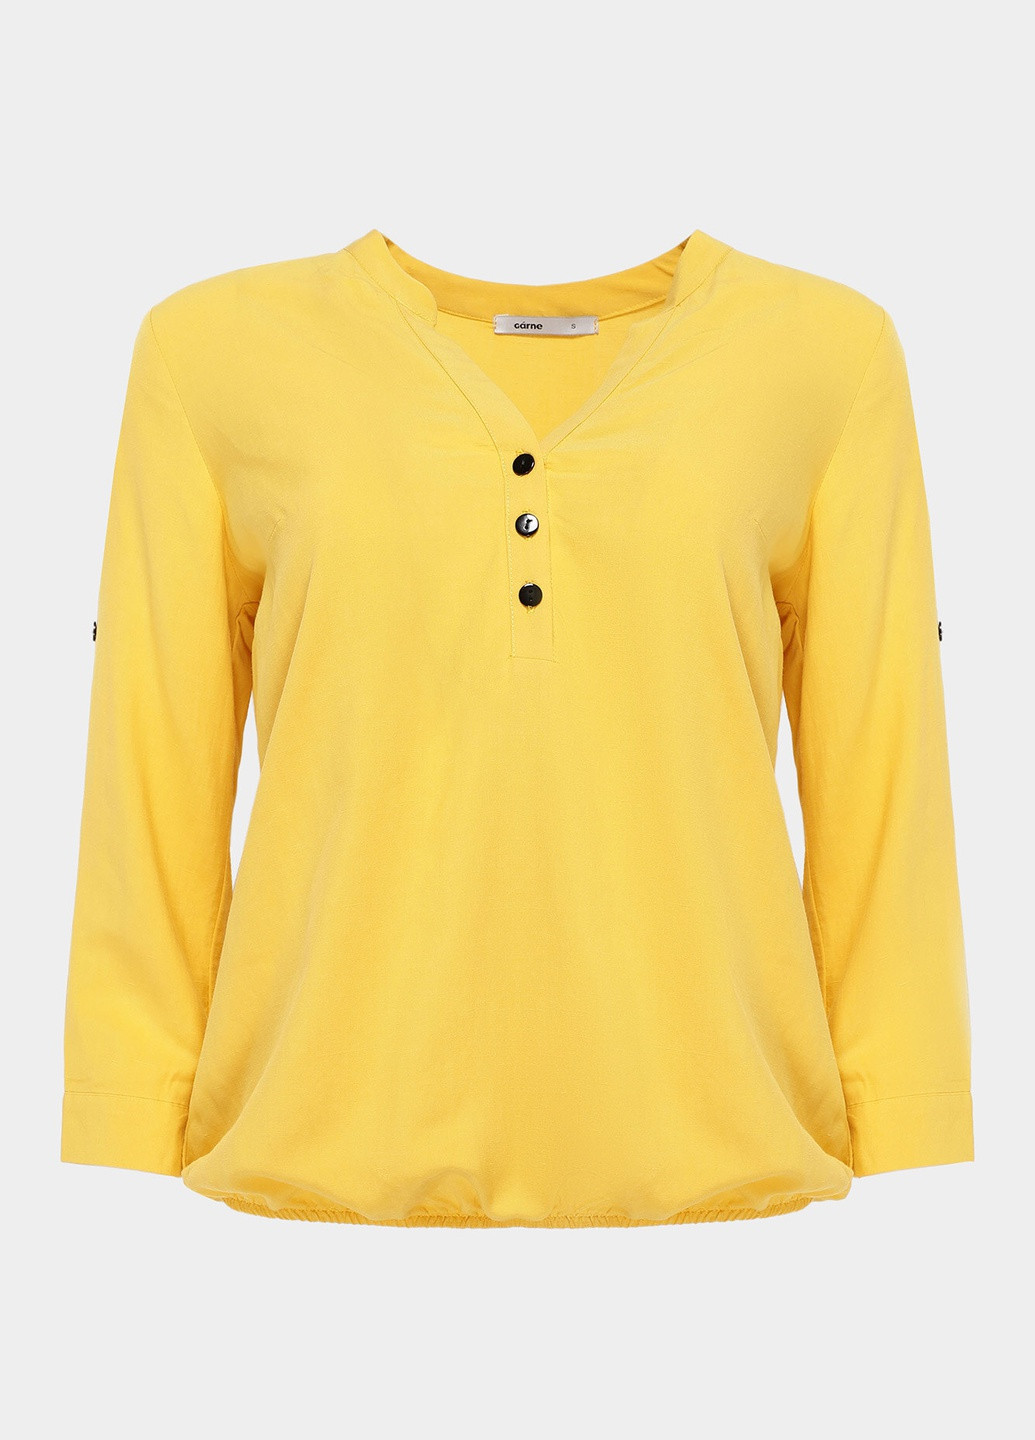 Жовта літня блуза yellow Garne